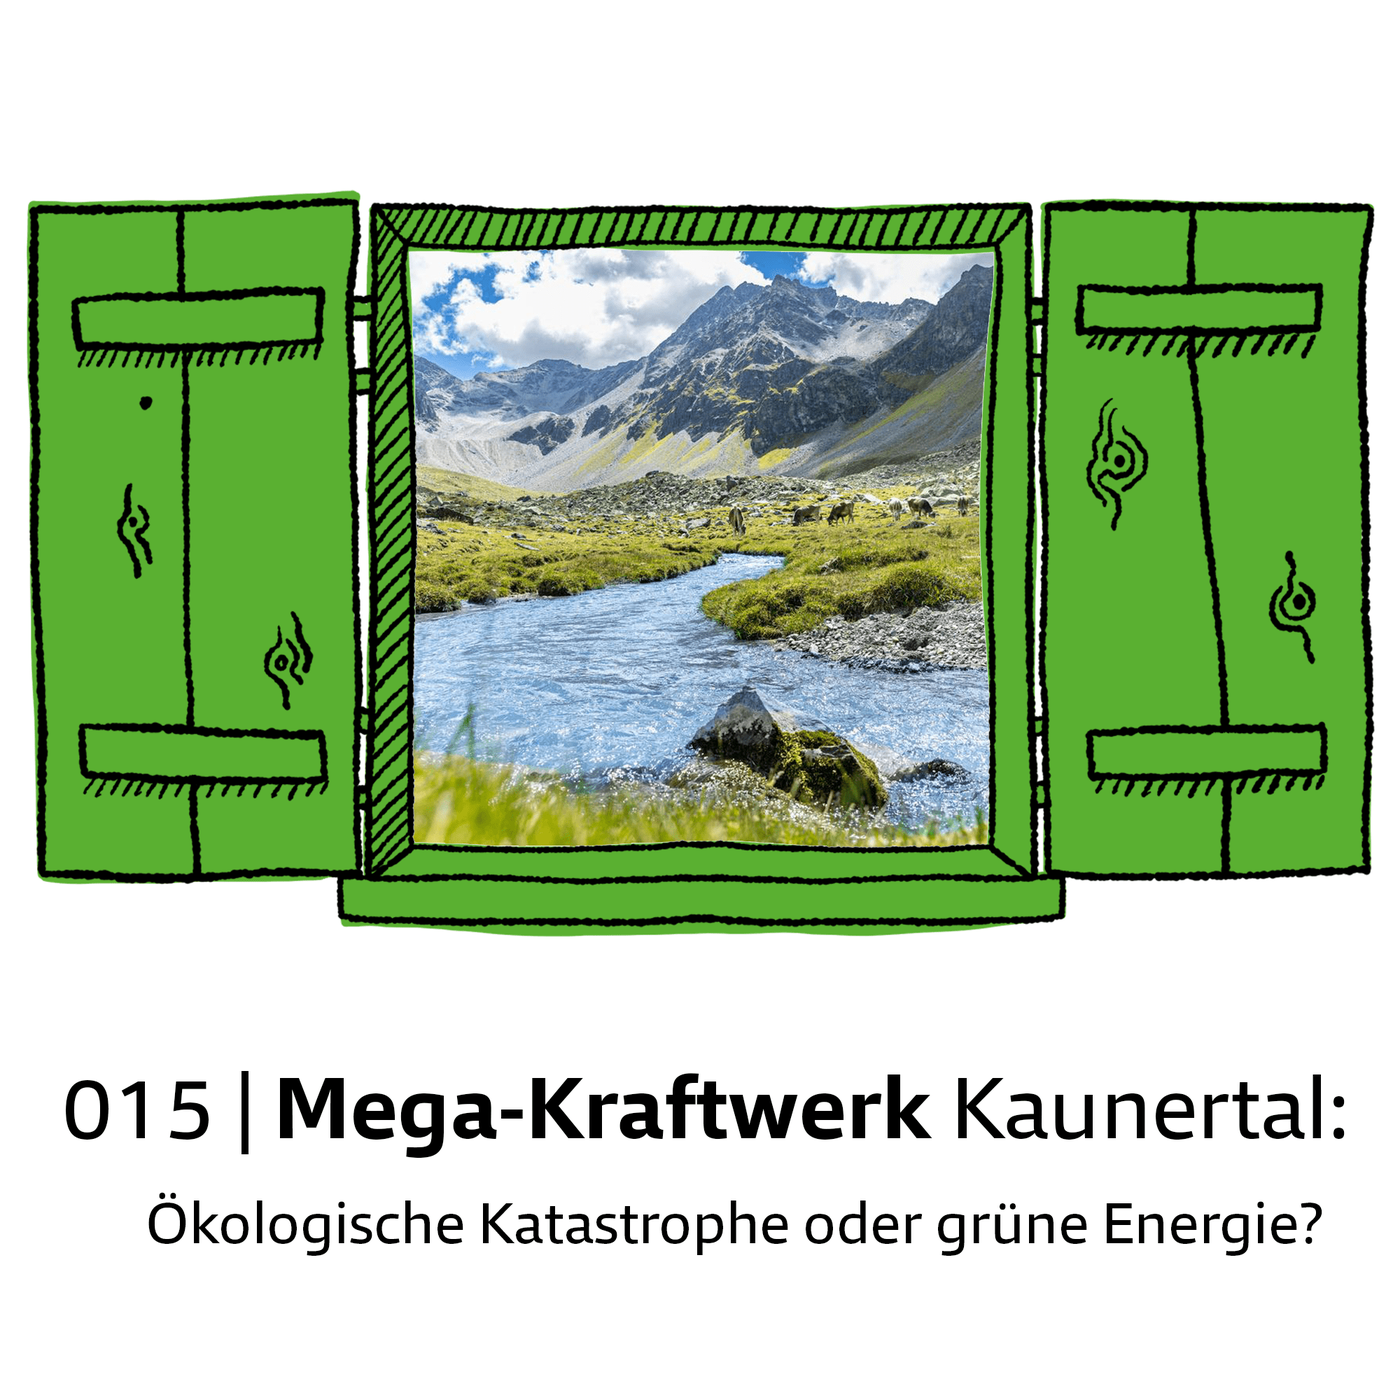 #015 Mega-Kraftwerk Kaunertal